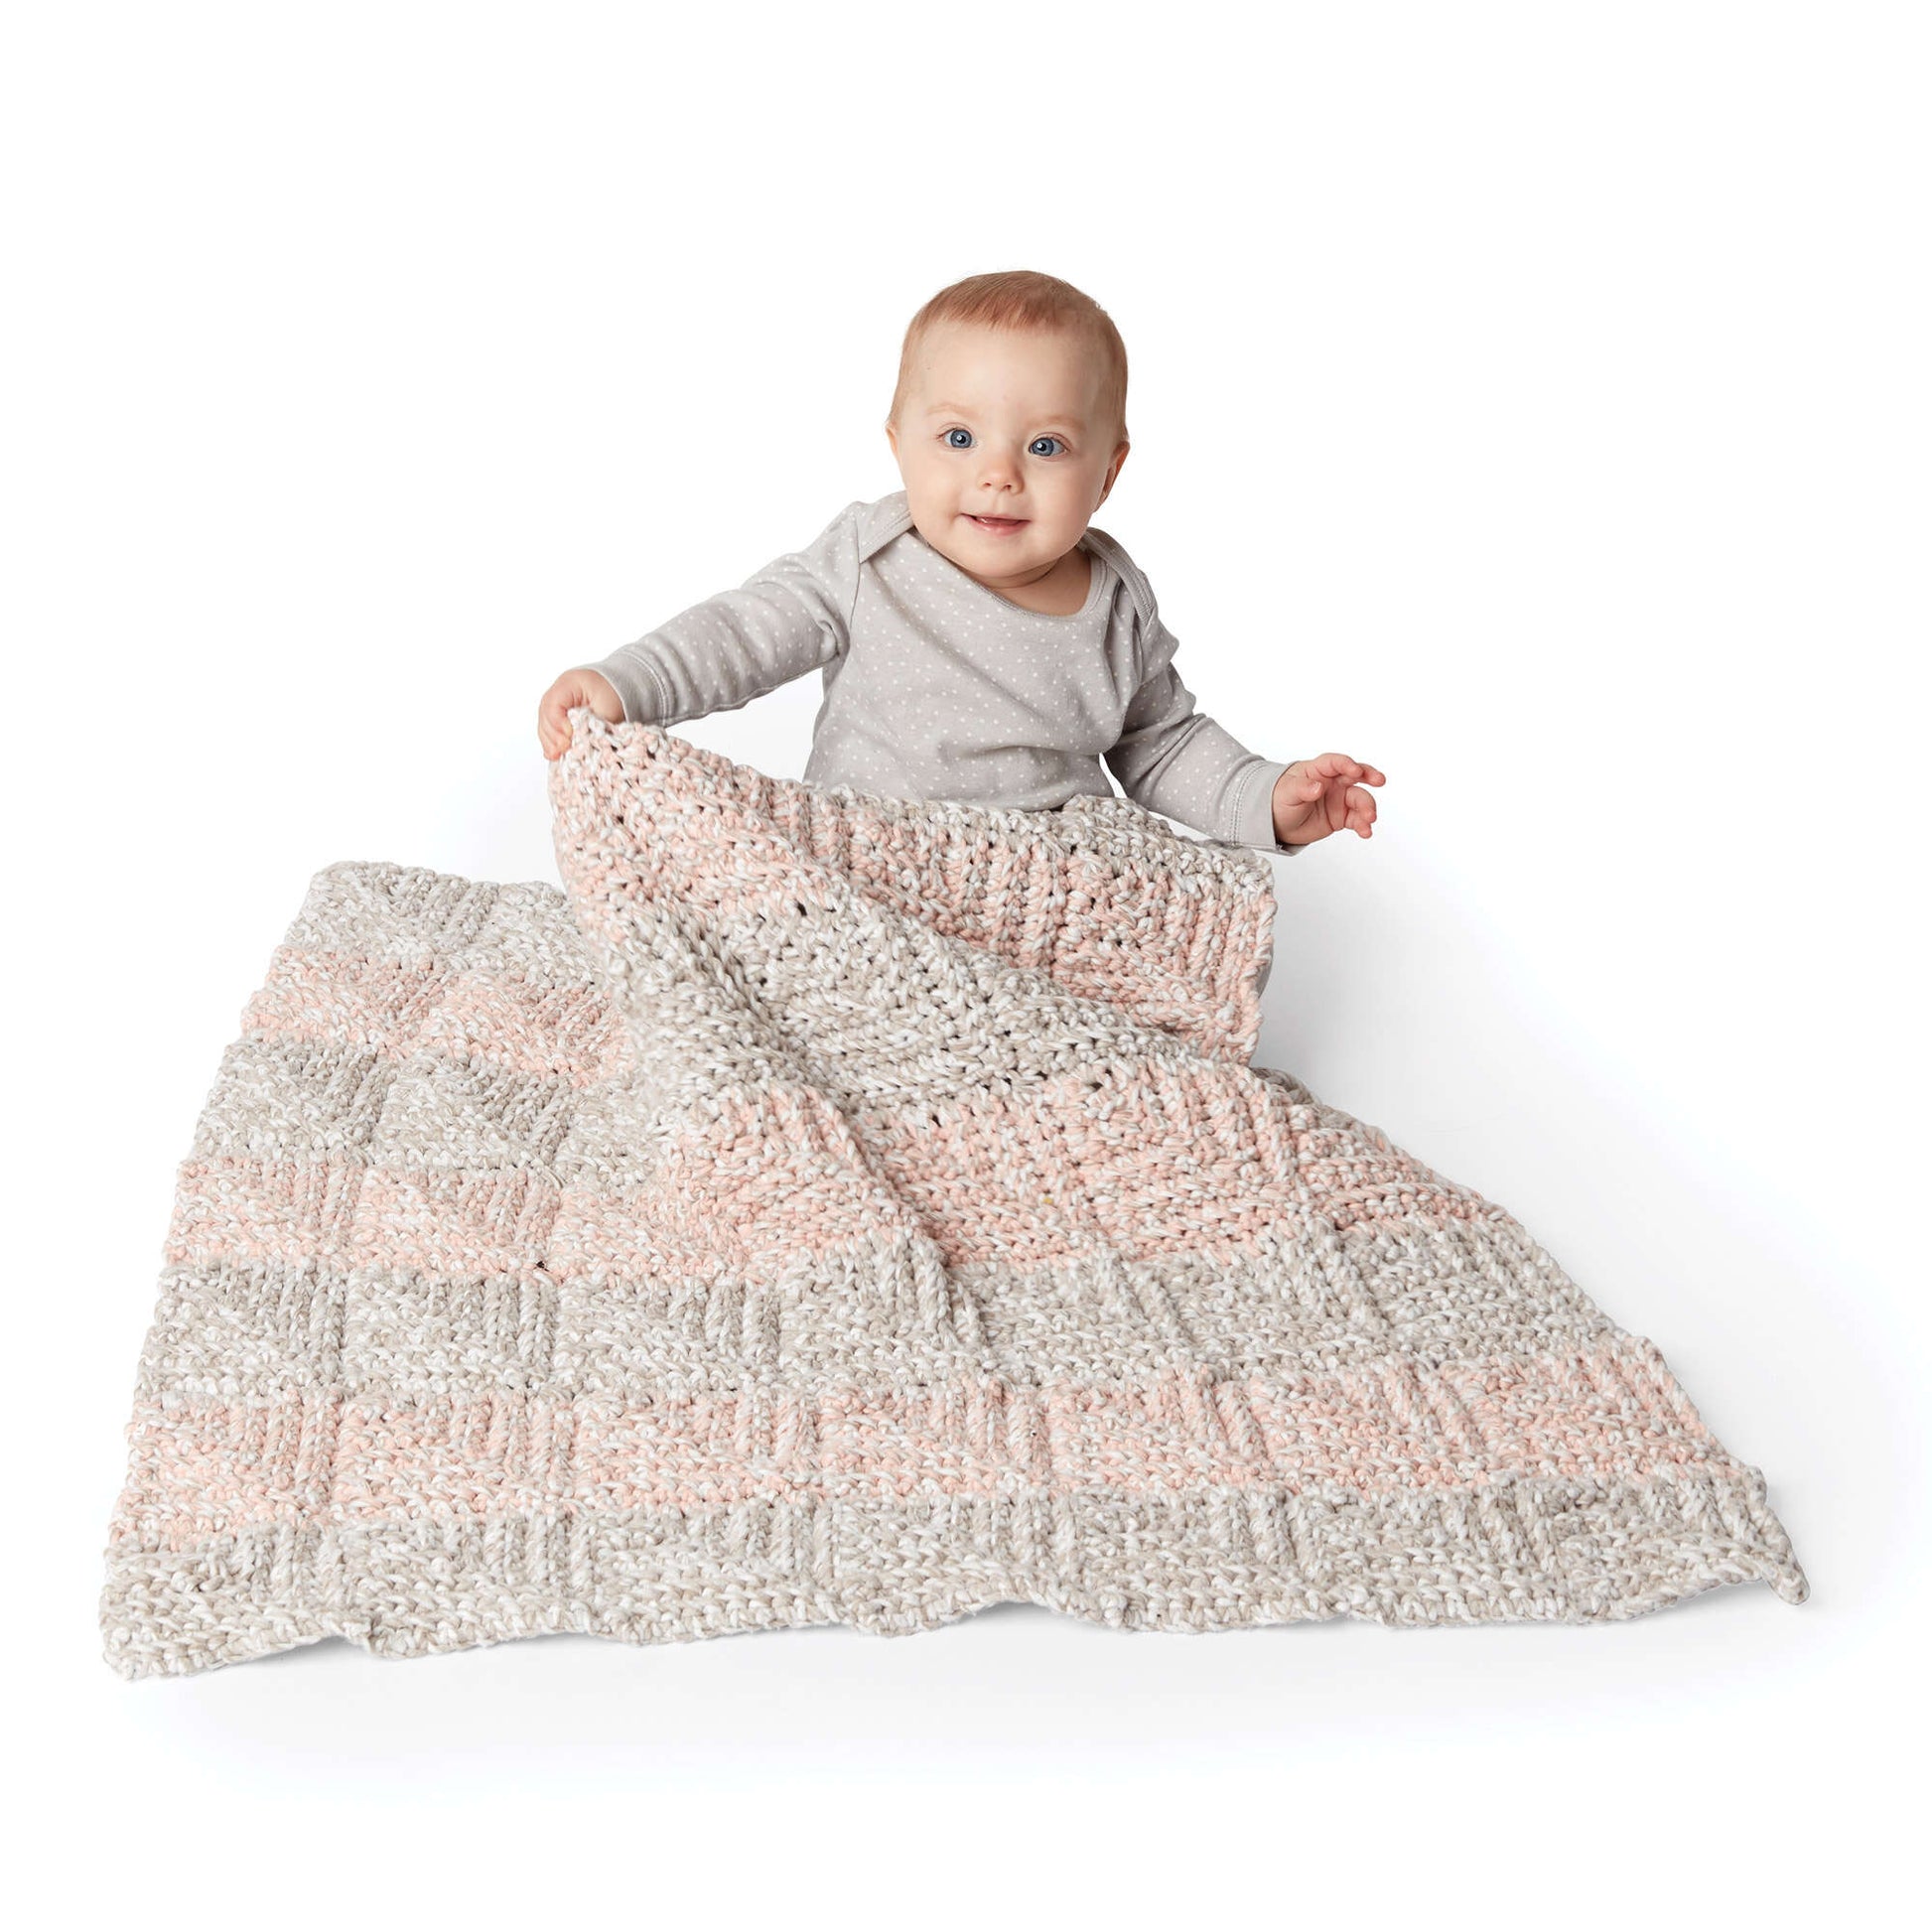 Bernat Mitered Crochet Blanket Crochet Blanket made in Bernat Baby Marly yarn